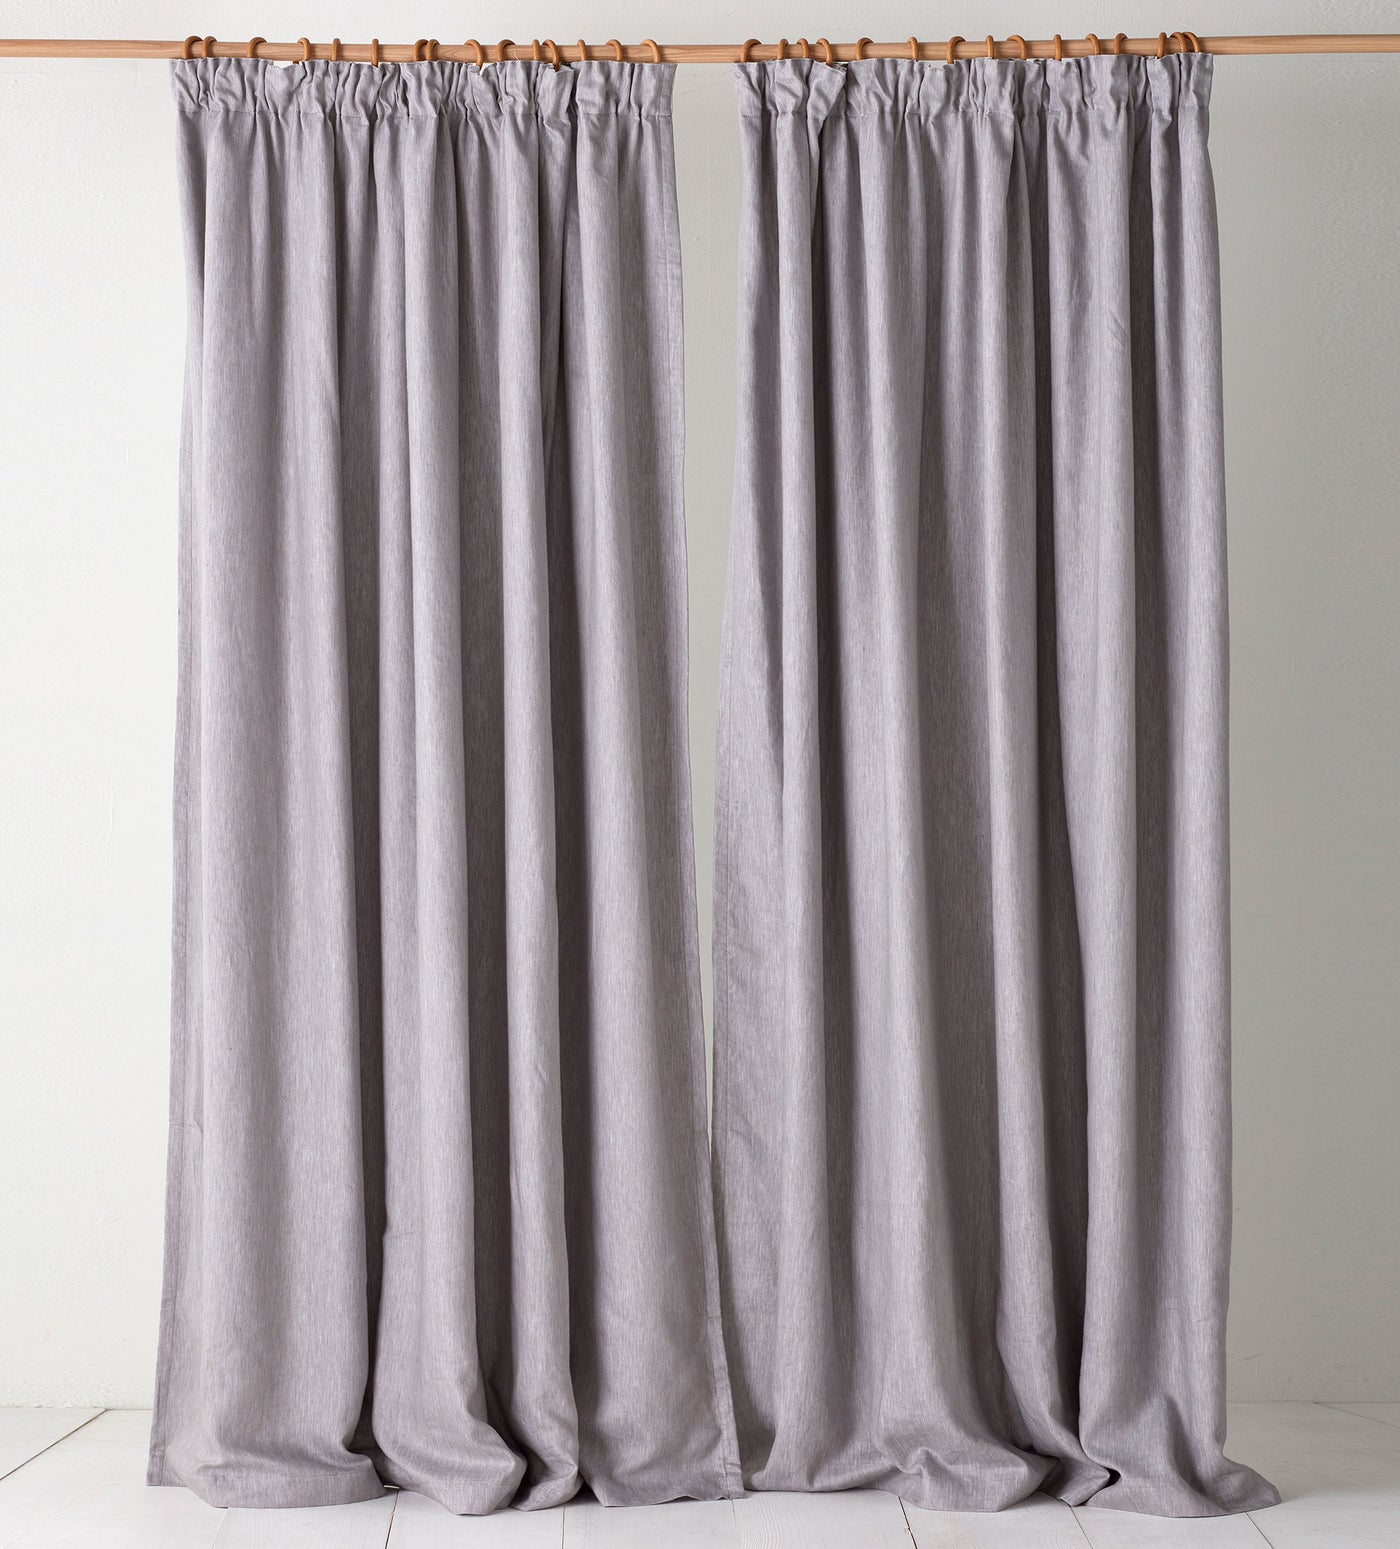 Flint Grey Twill Cotton Linen Blackout Curtains (Pair)